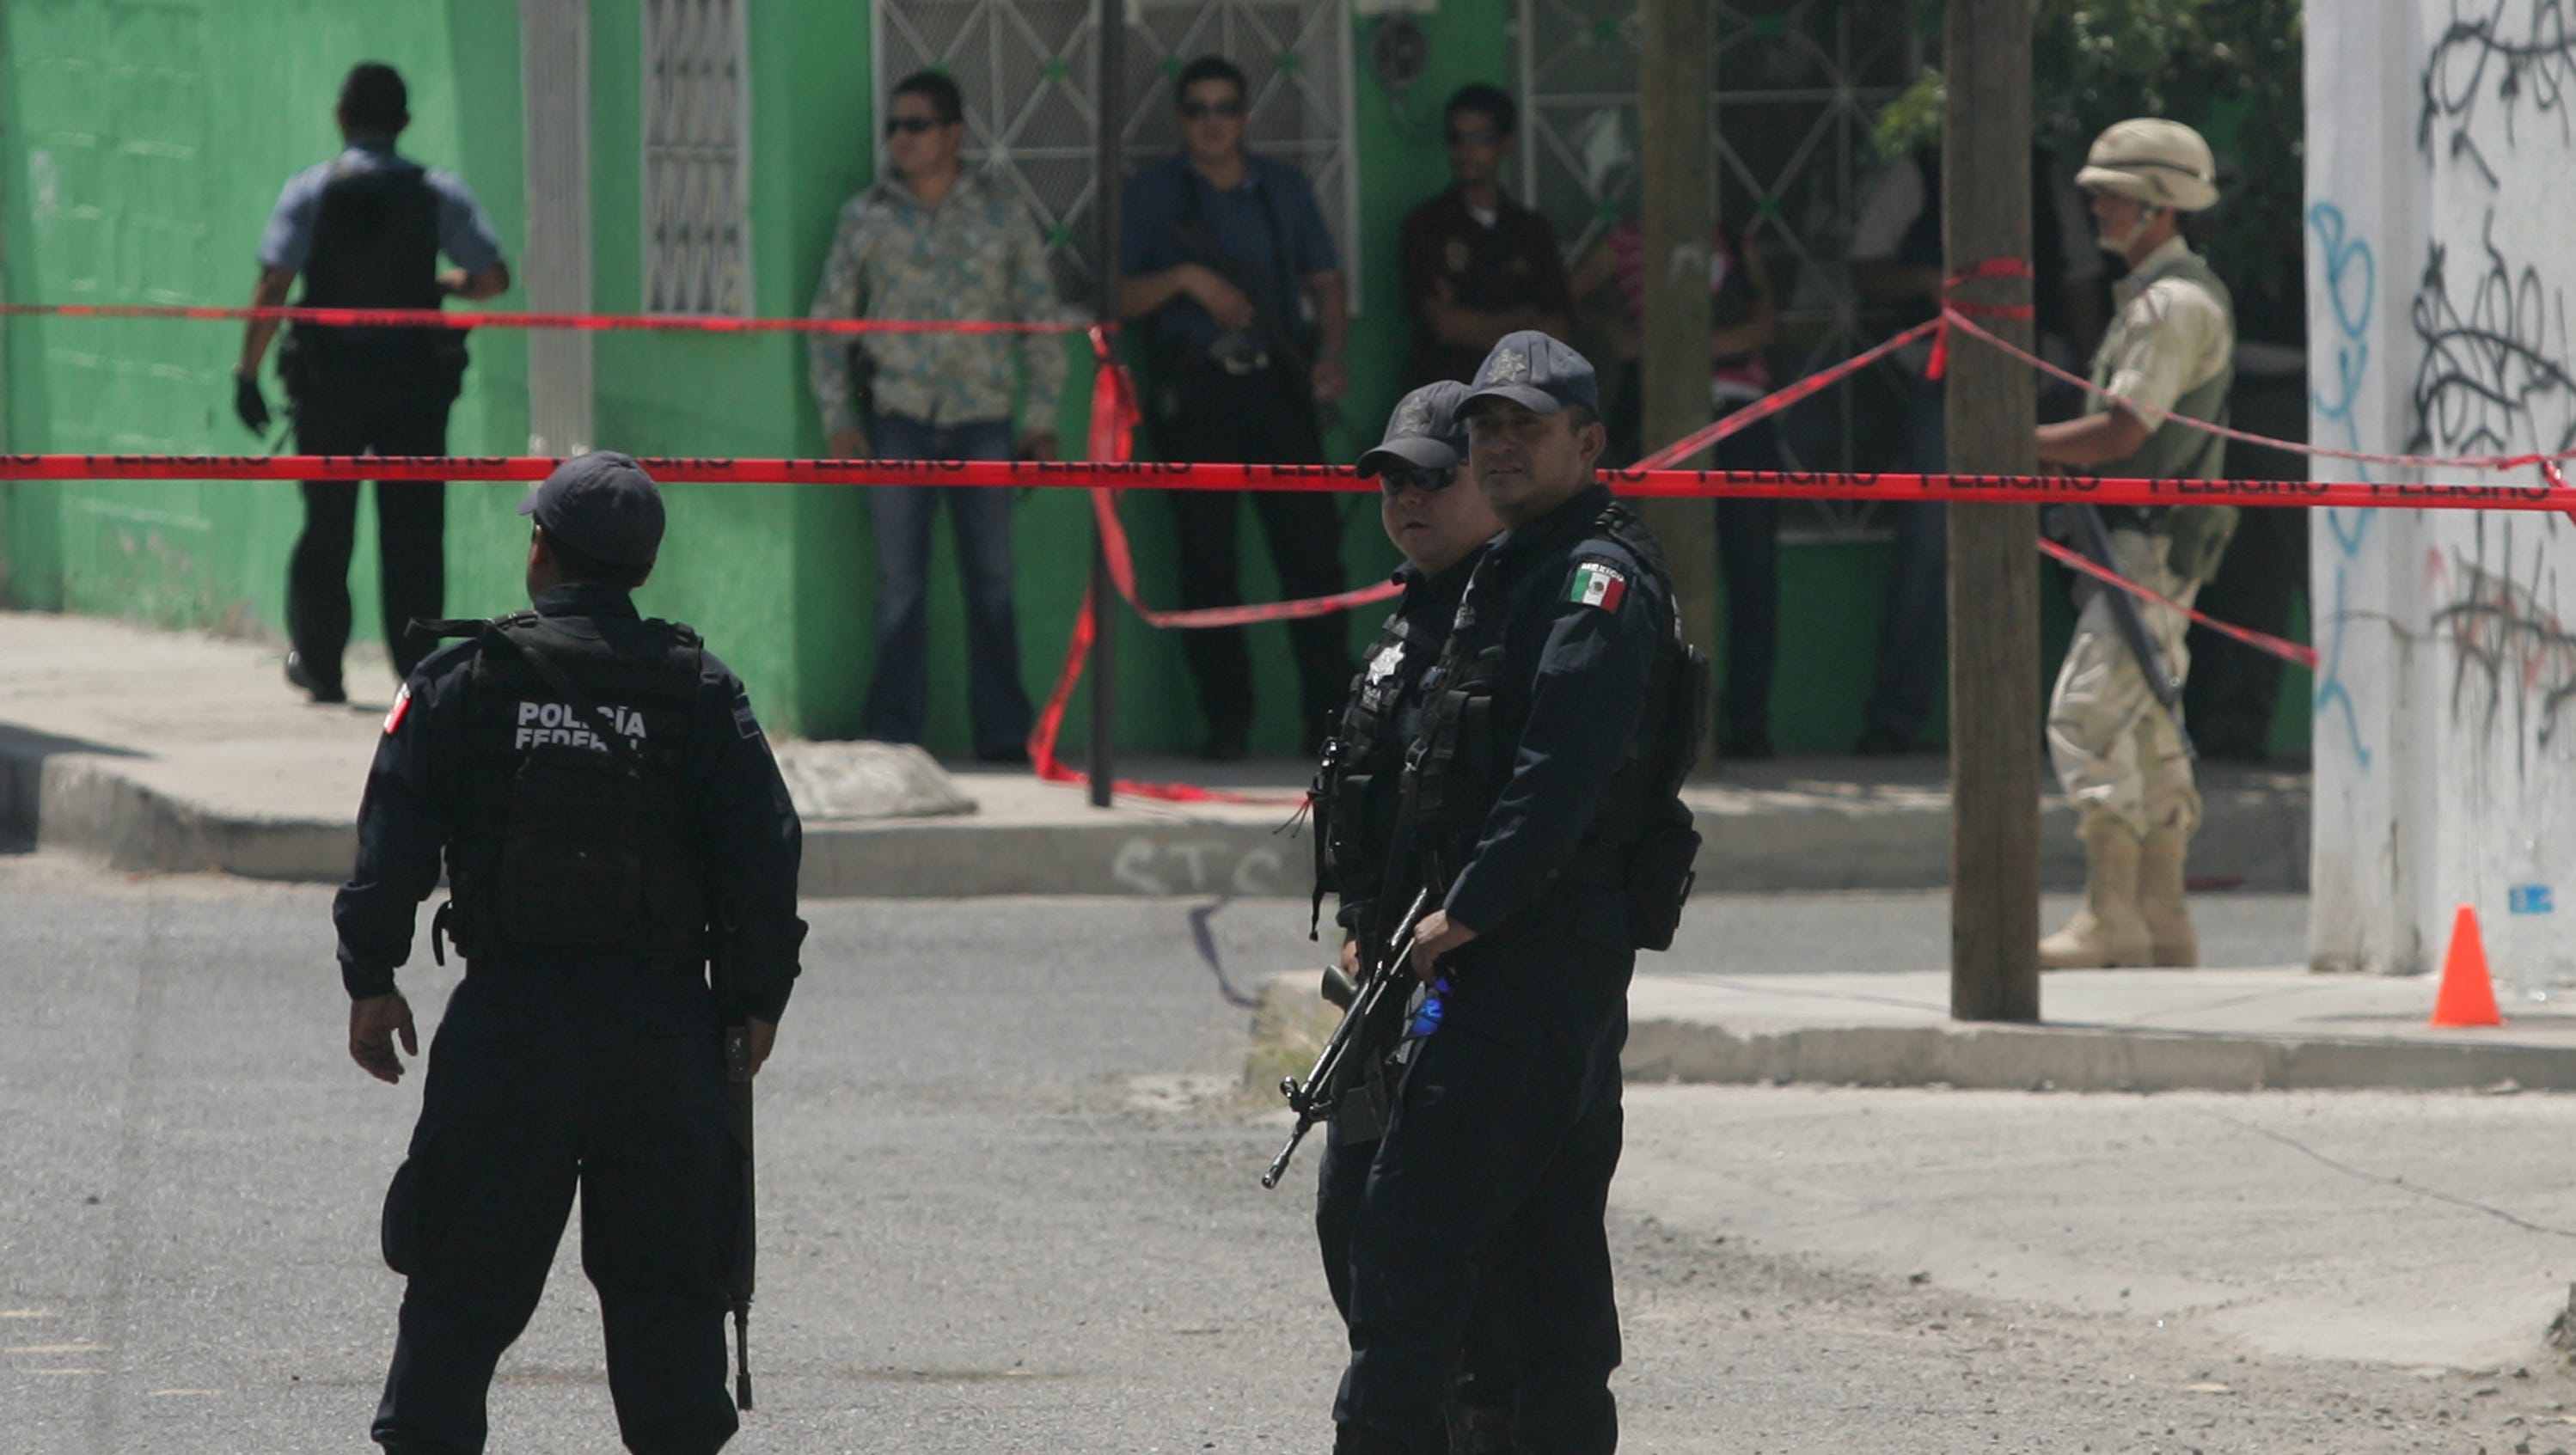 Execution-style deaths, shootings return to Juarez